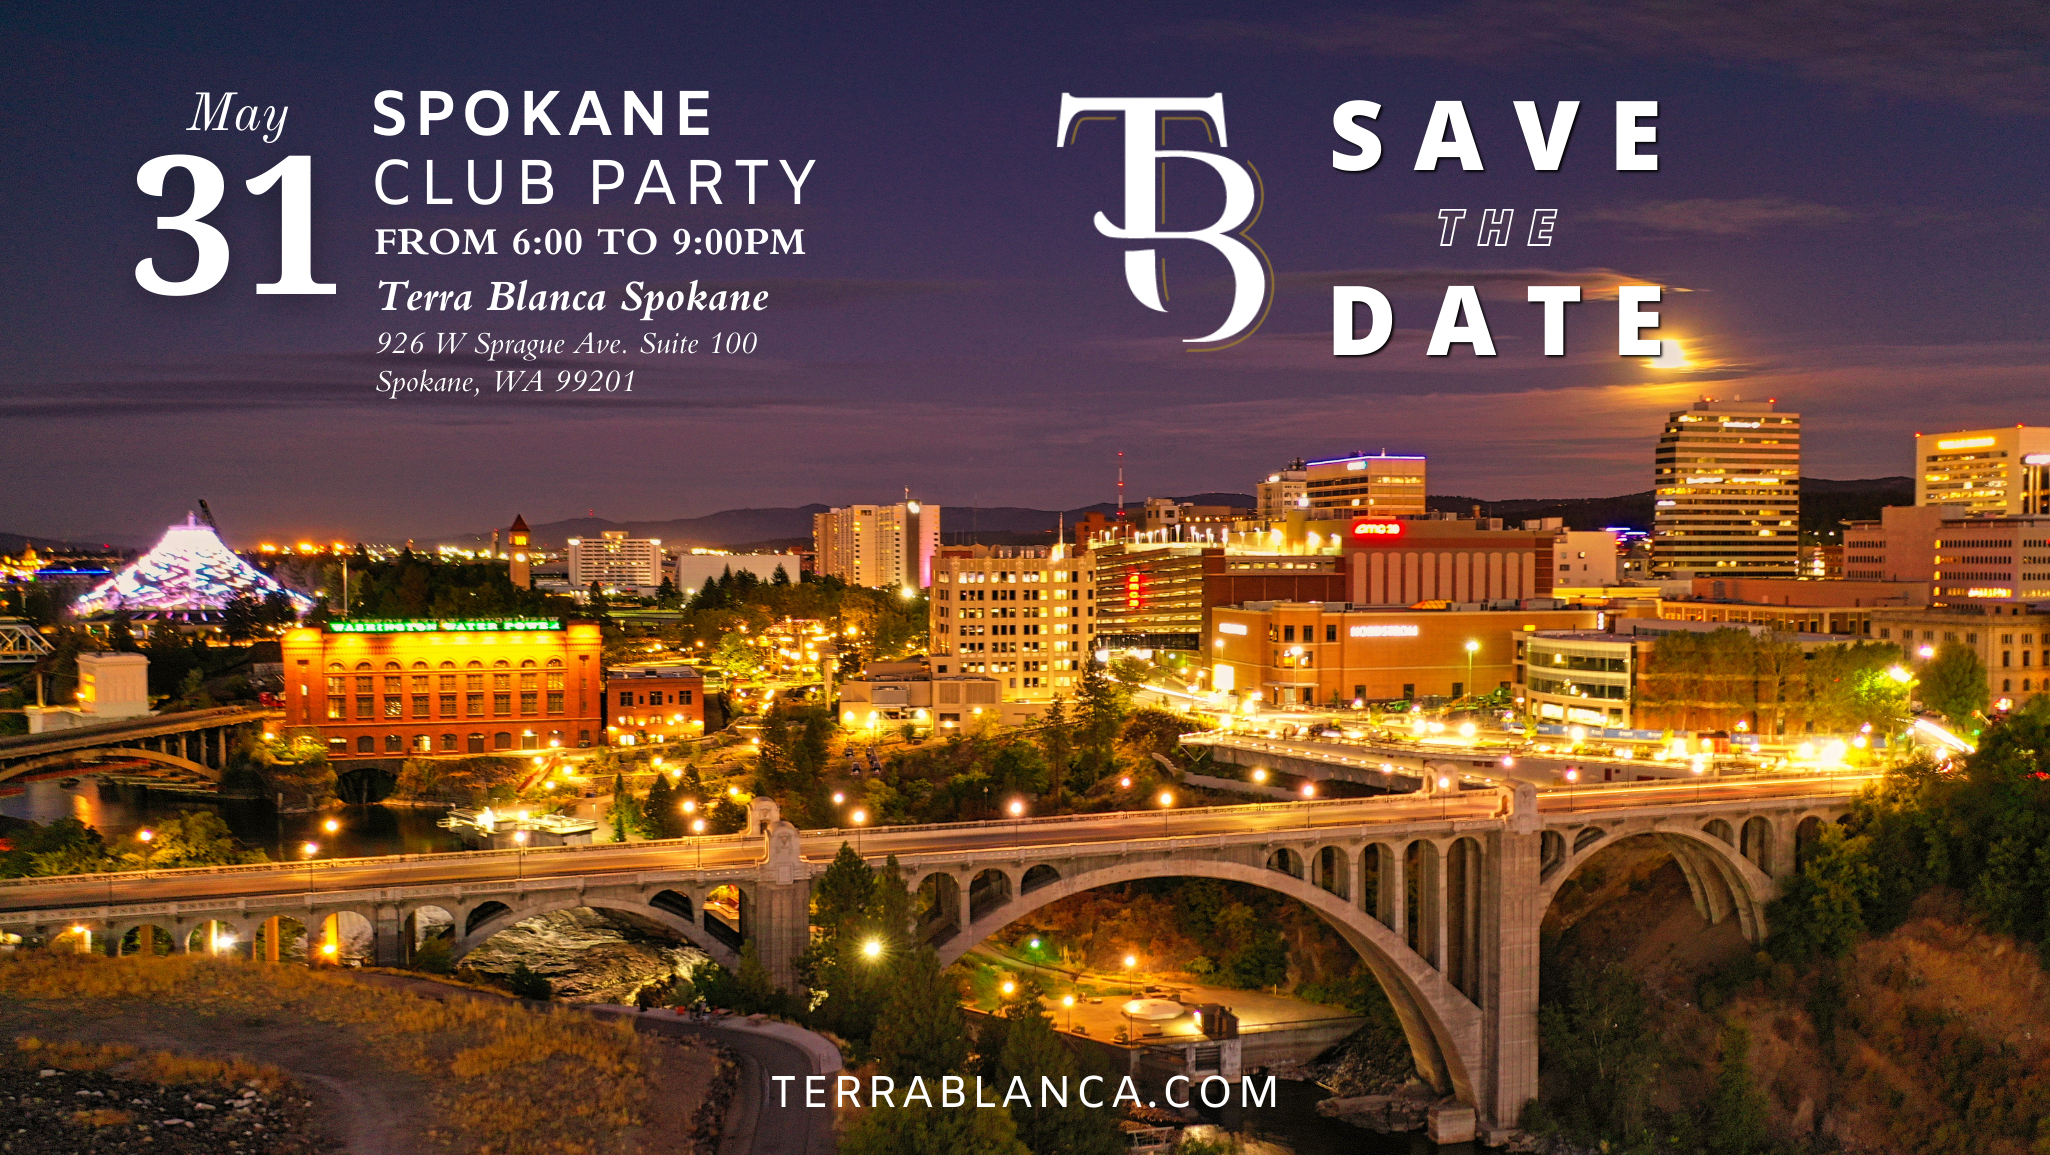 Spokane Club Party on May 31